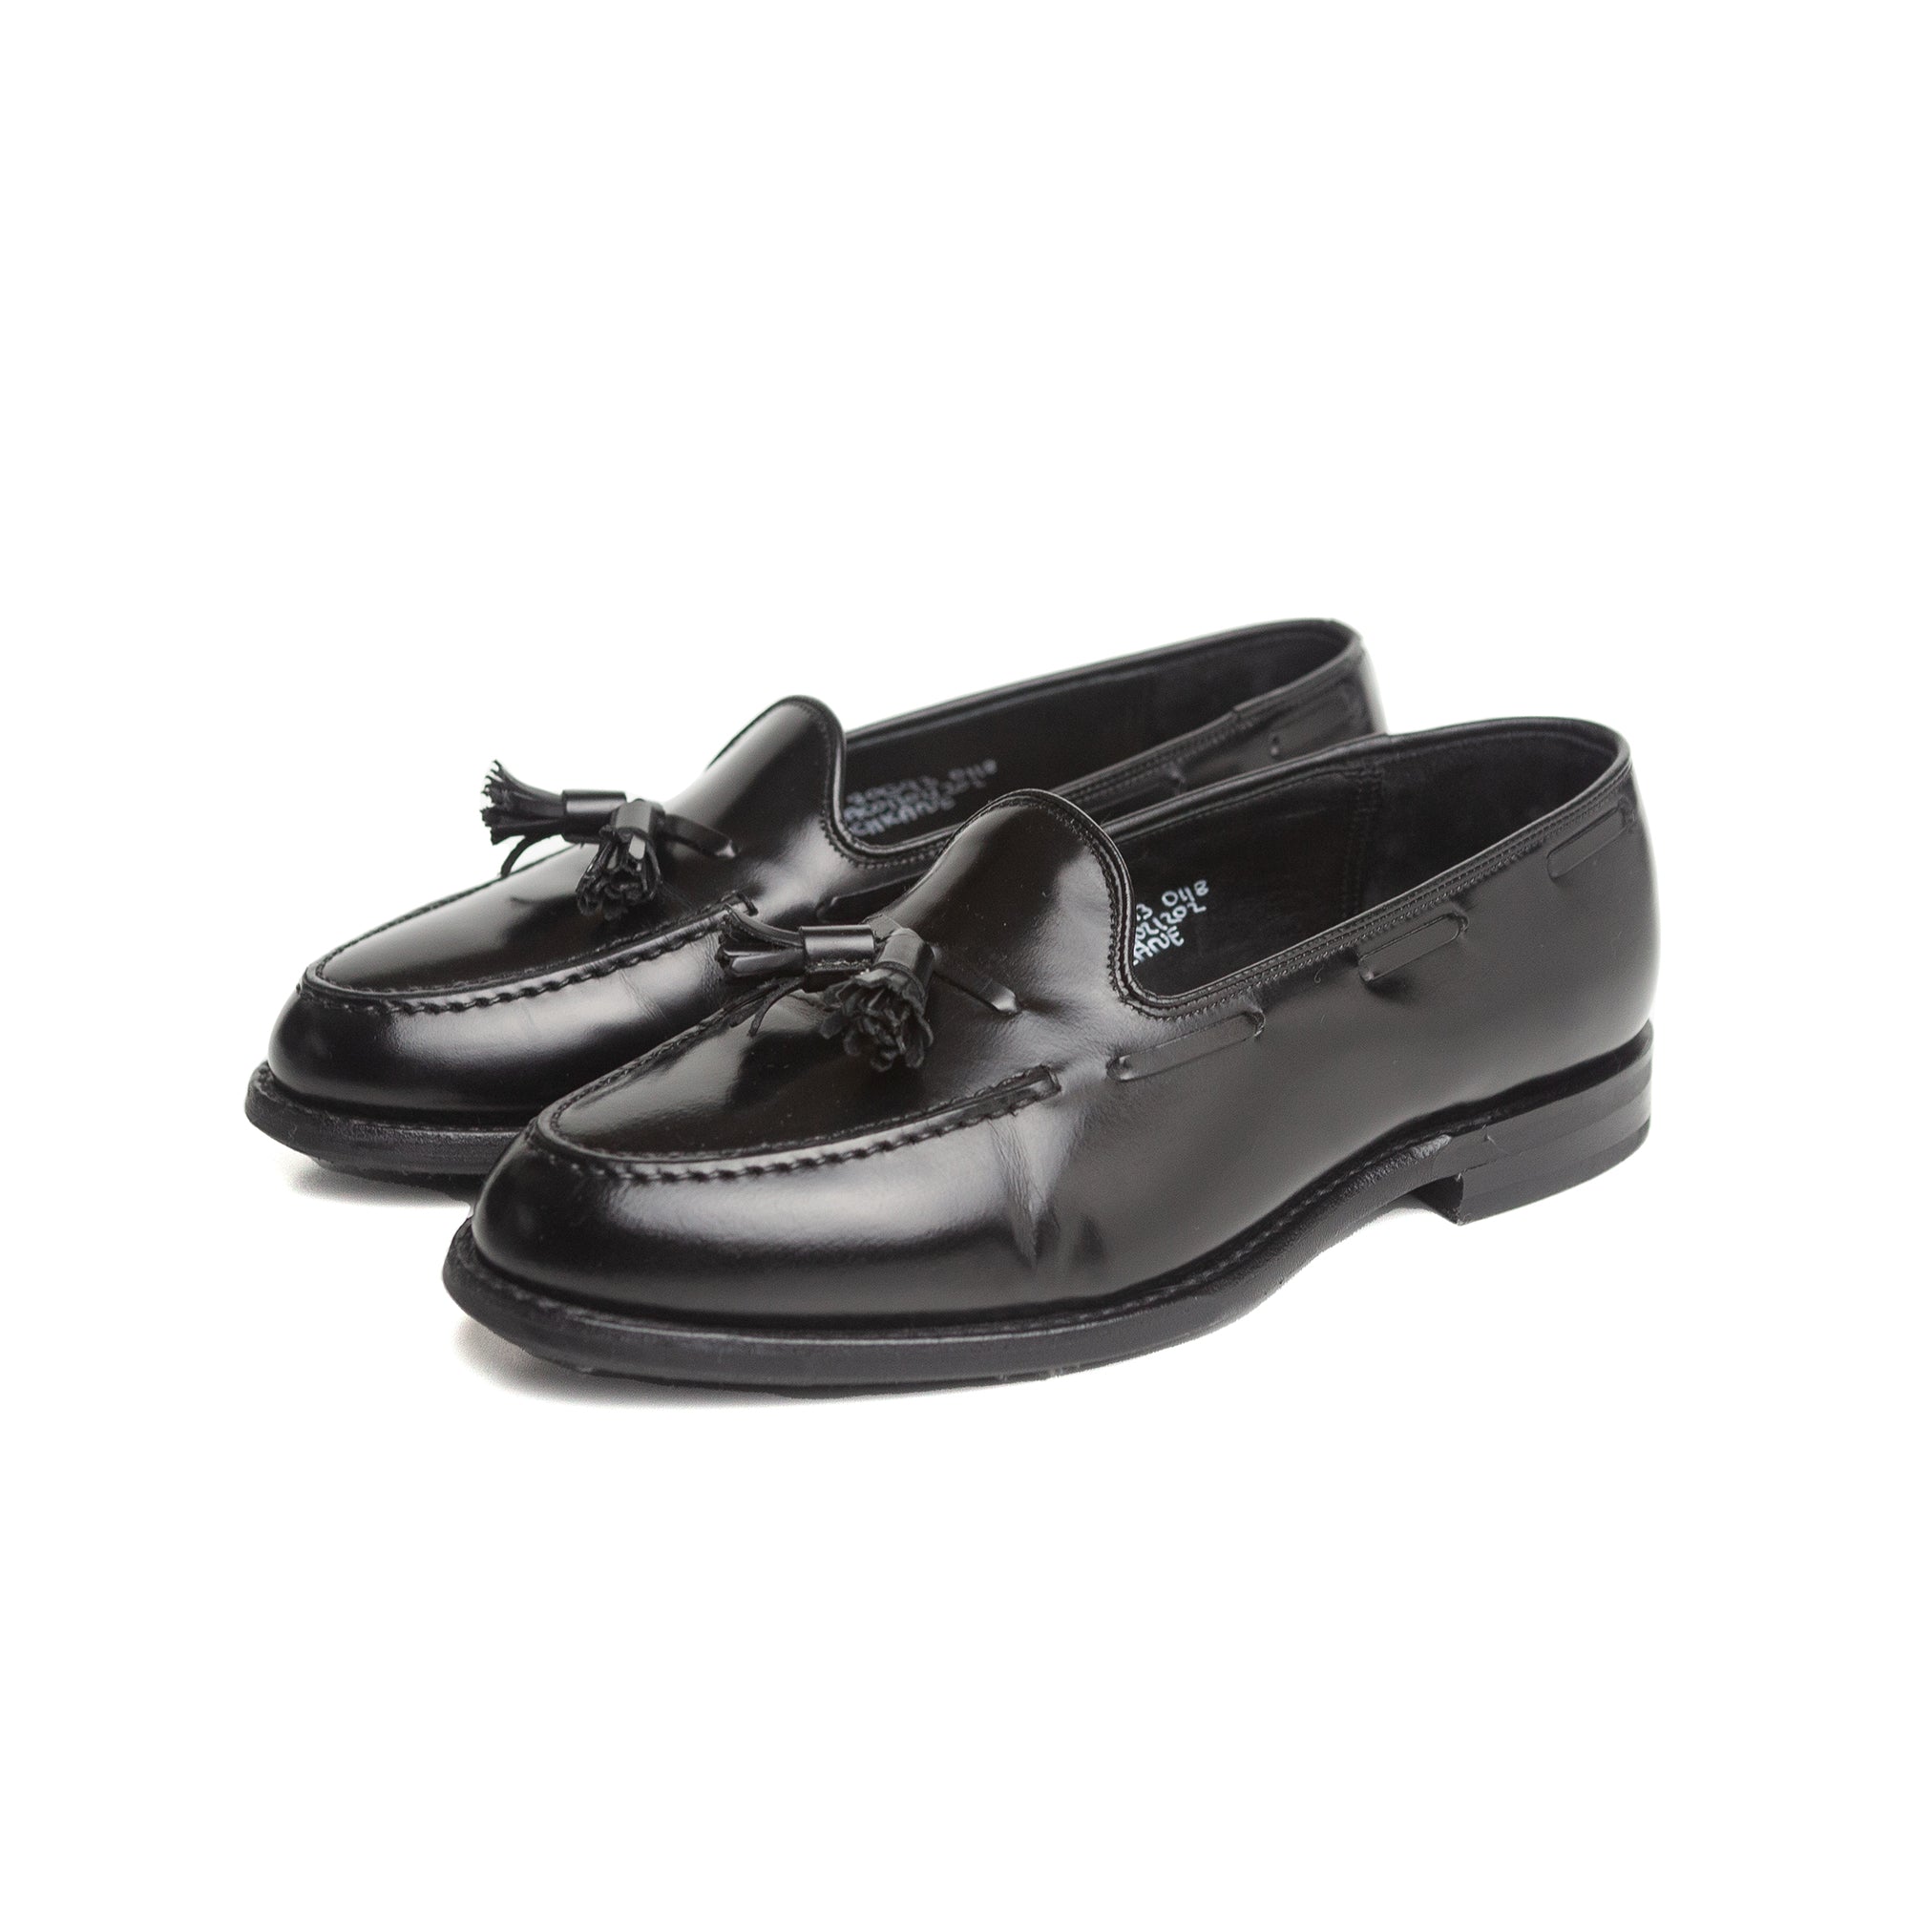 Chicane Black Leather Shoes 8 UK